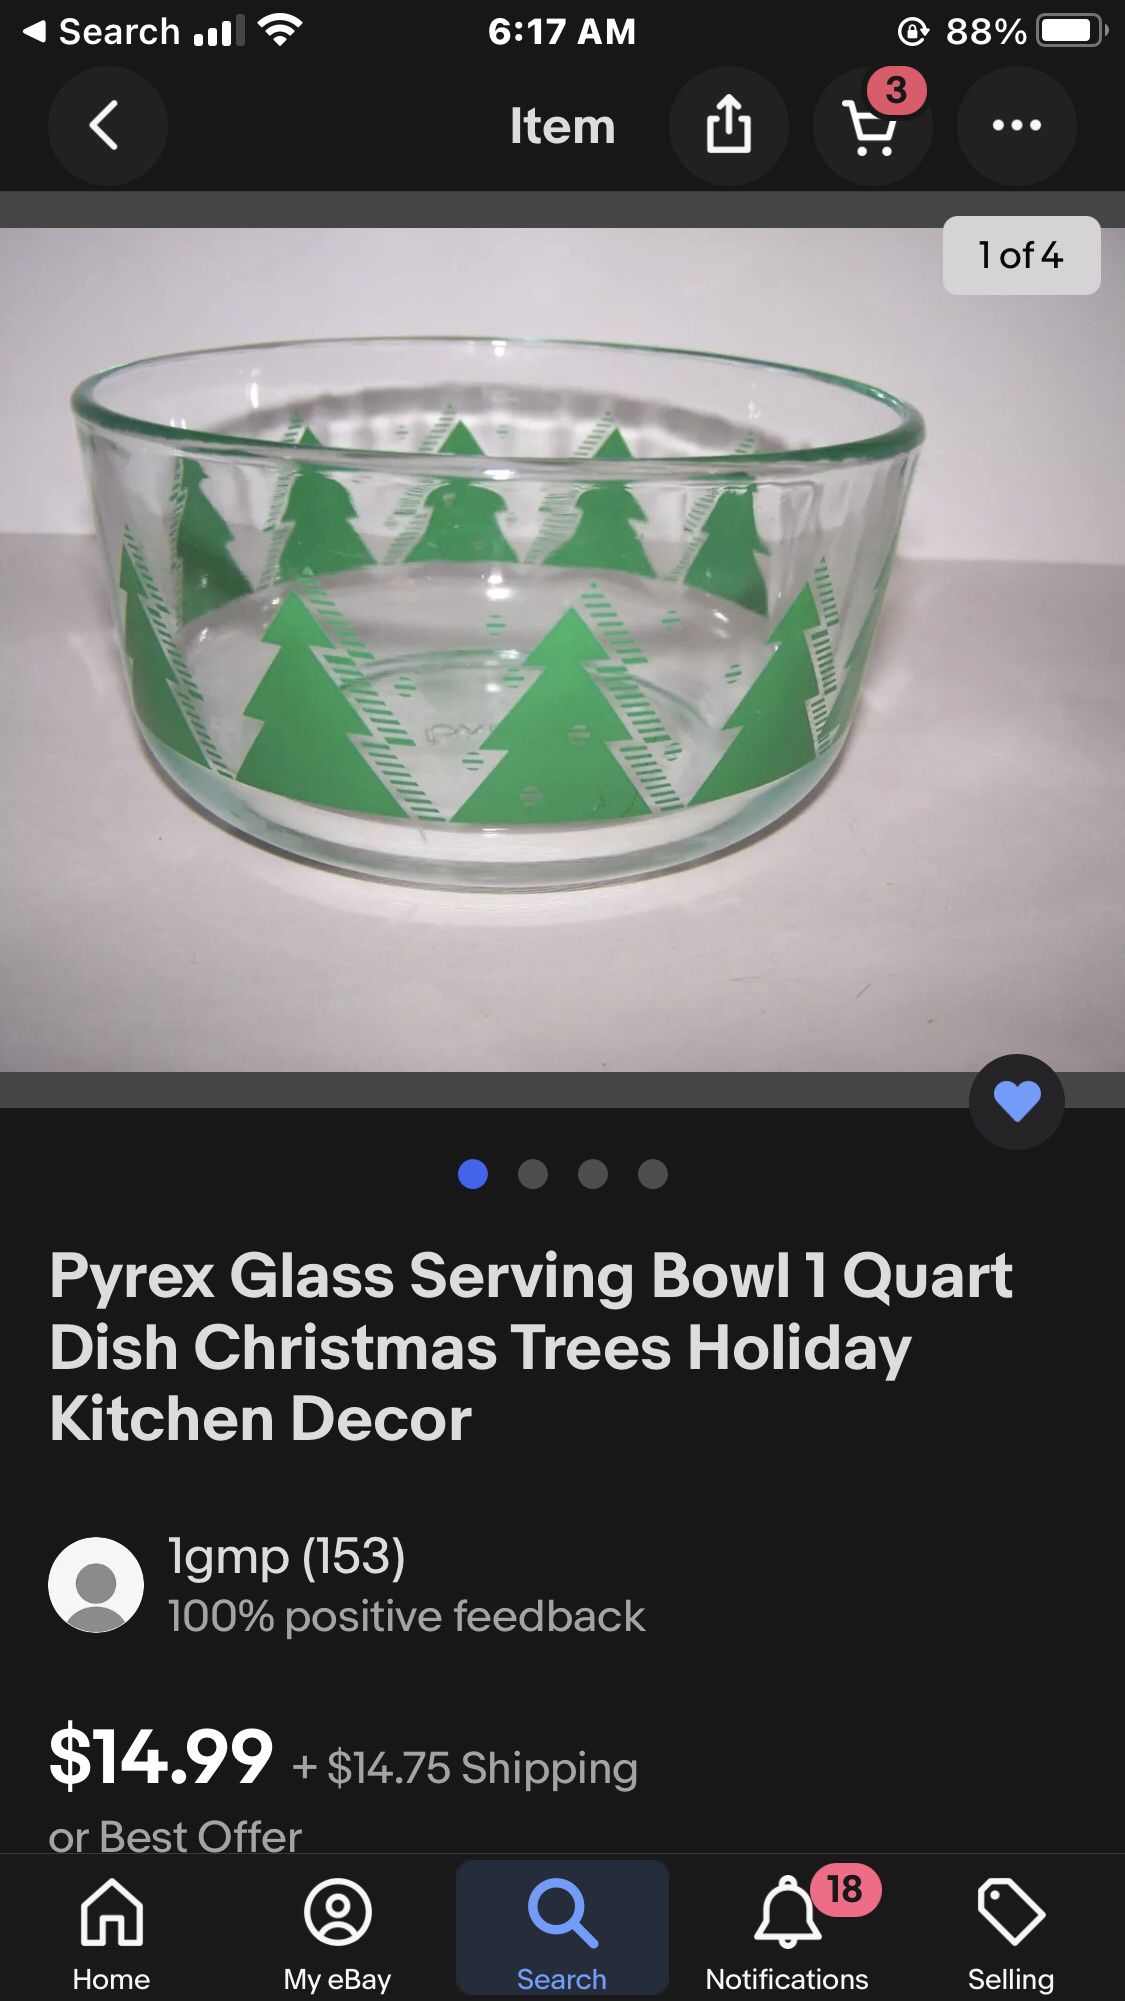 PYREX GLASS CHRISTMAS SERVING BOWL  1 QUART🎄